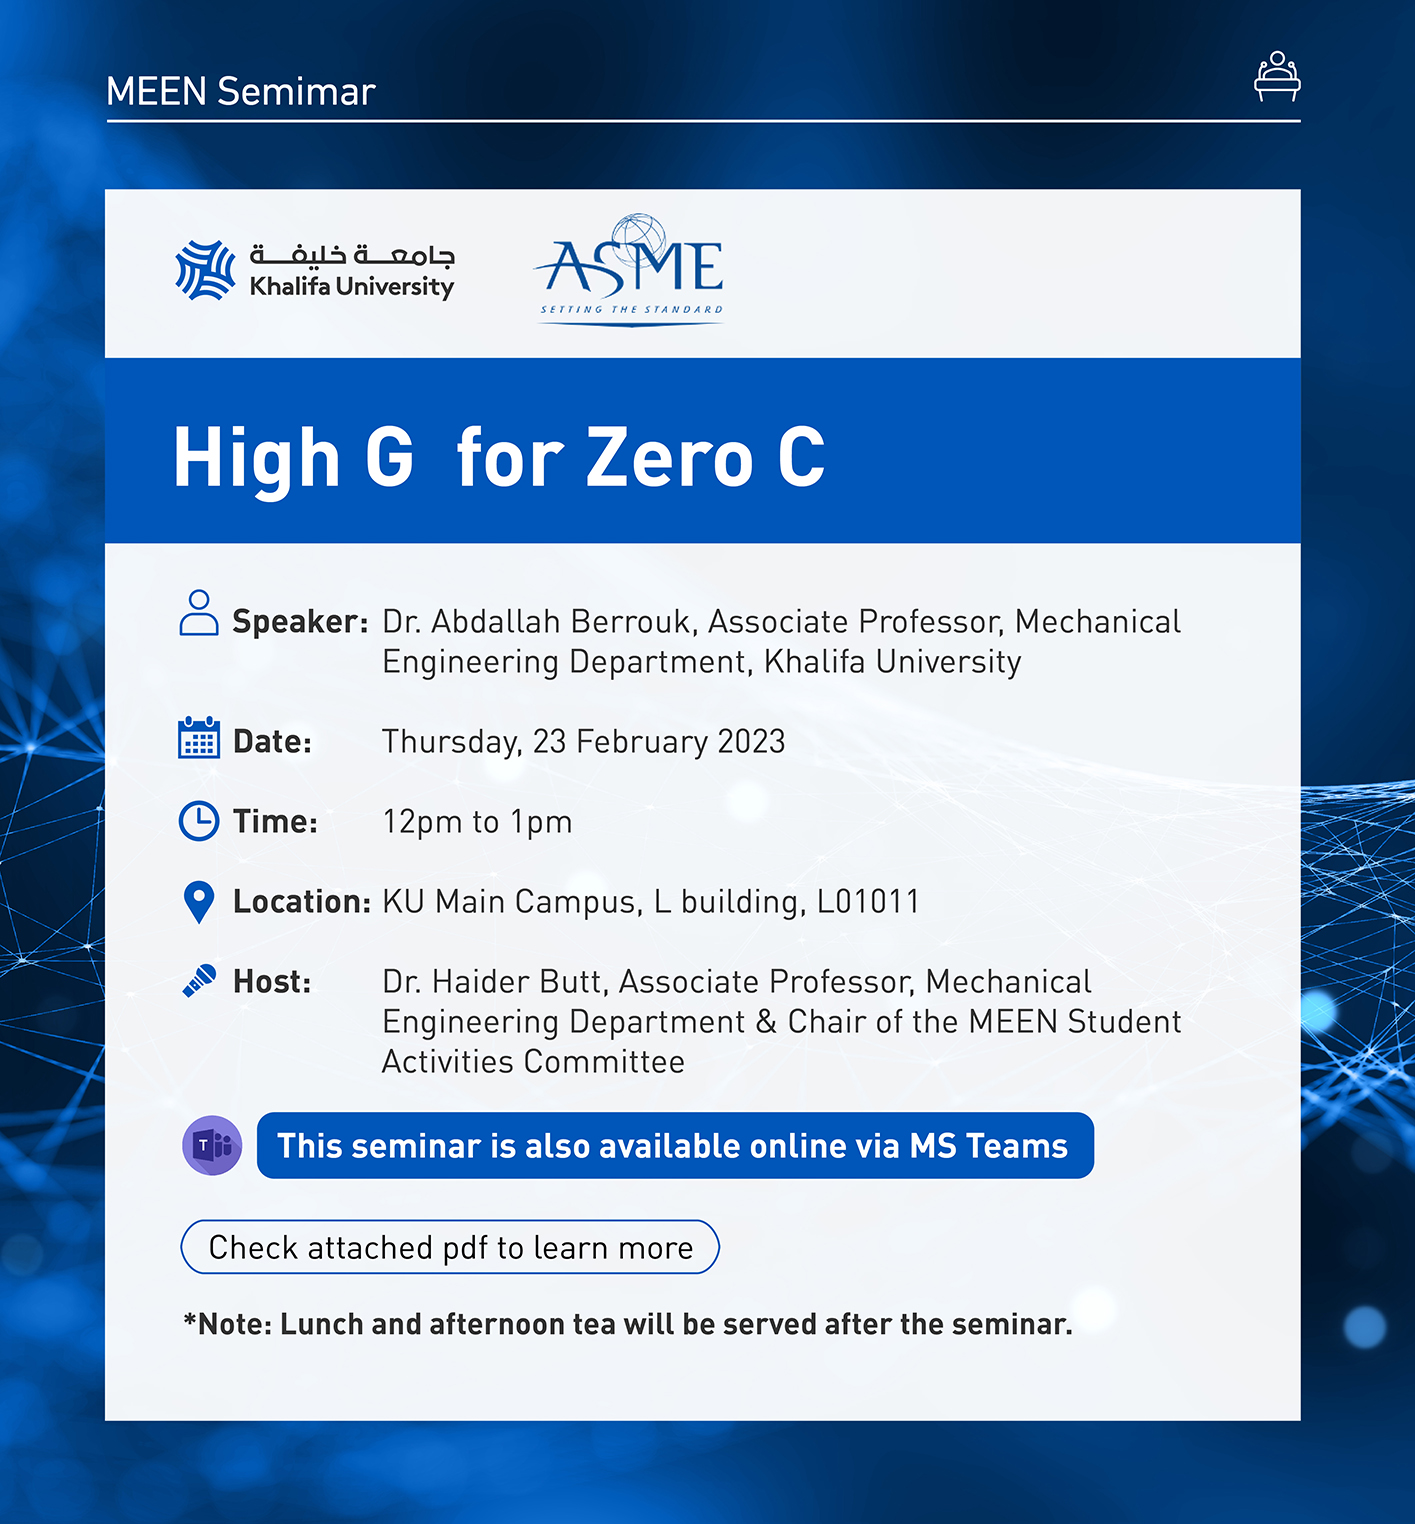 MEEN Seminar: High G for Zero C